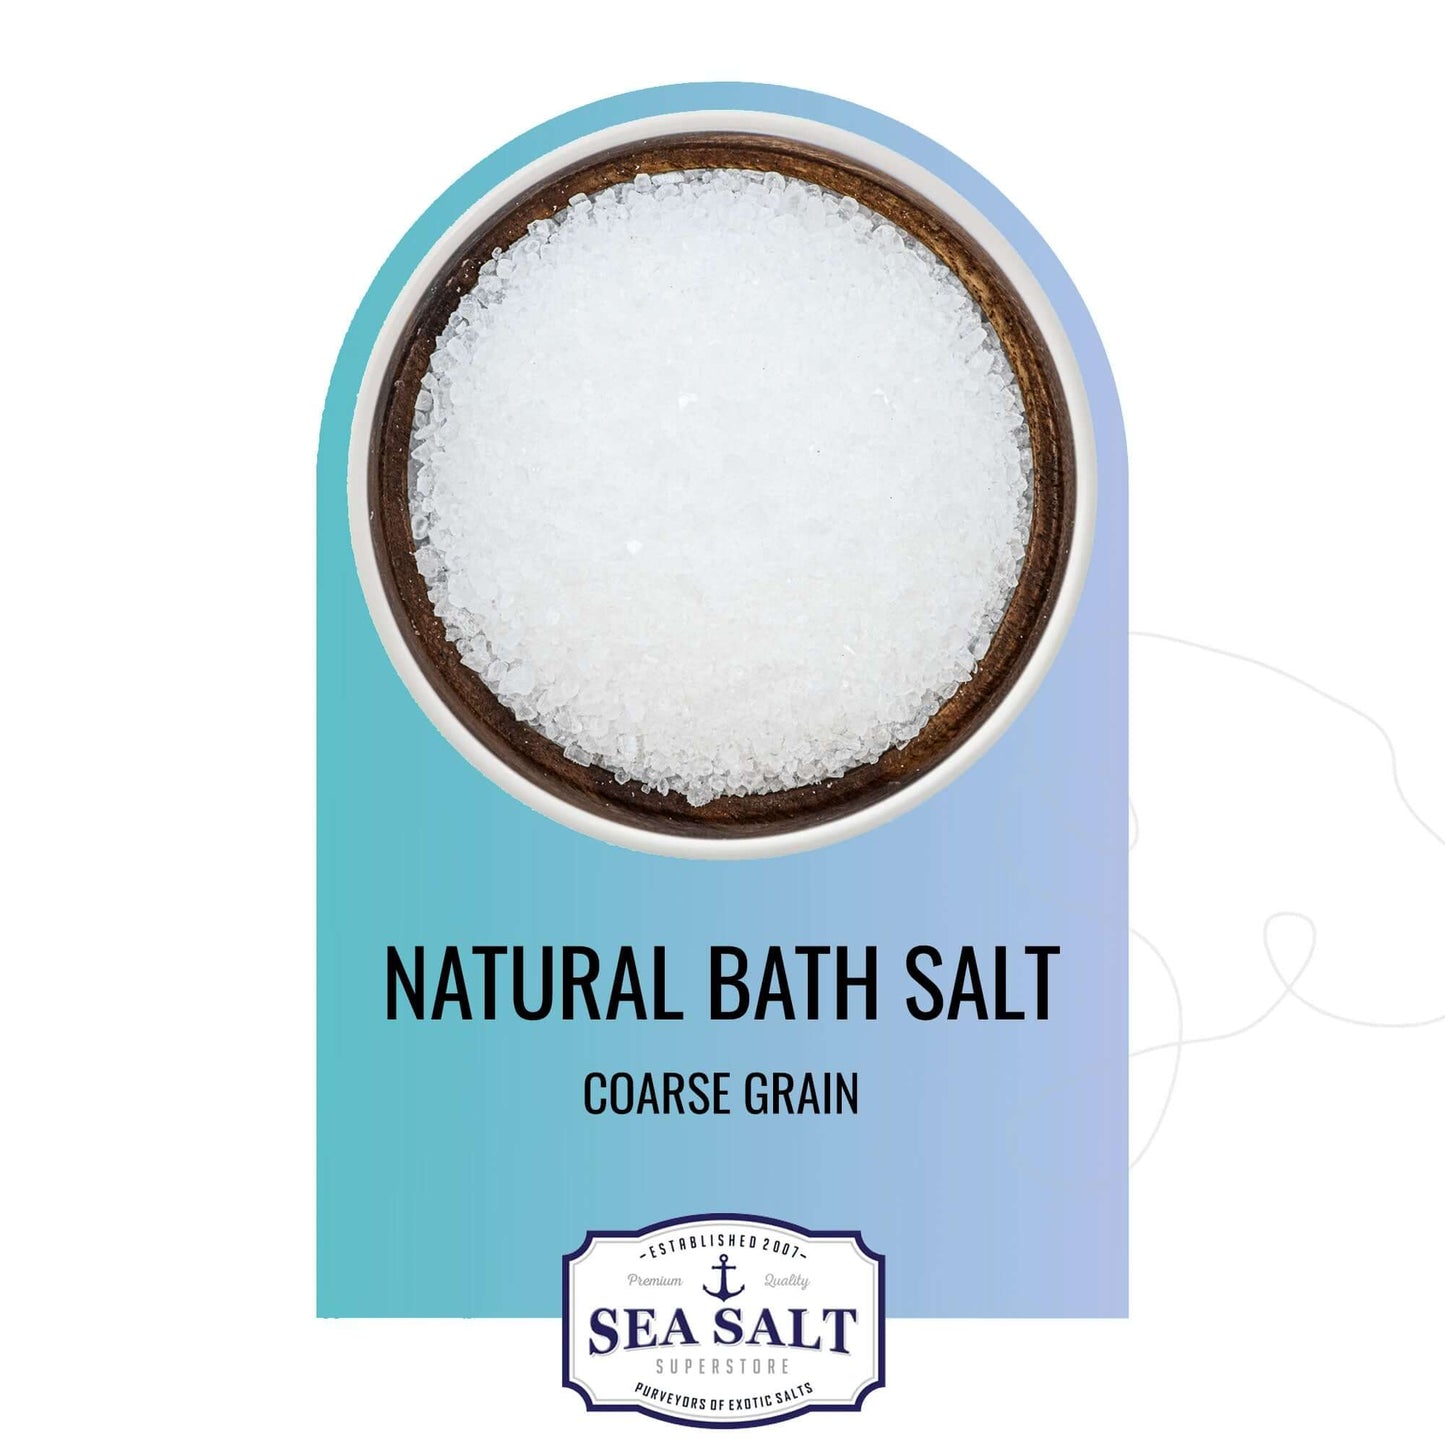 Natural Bath Salt - Coarse Grain